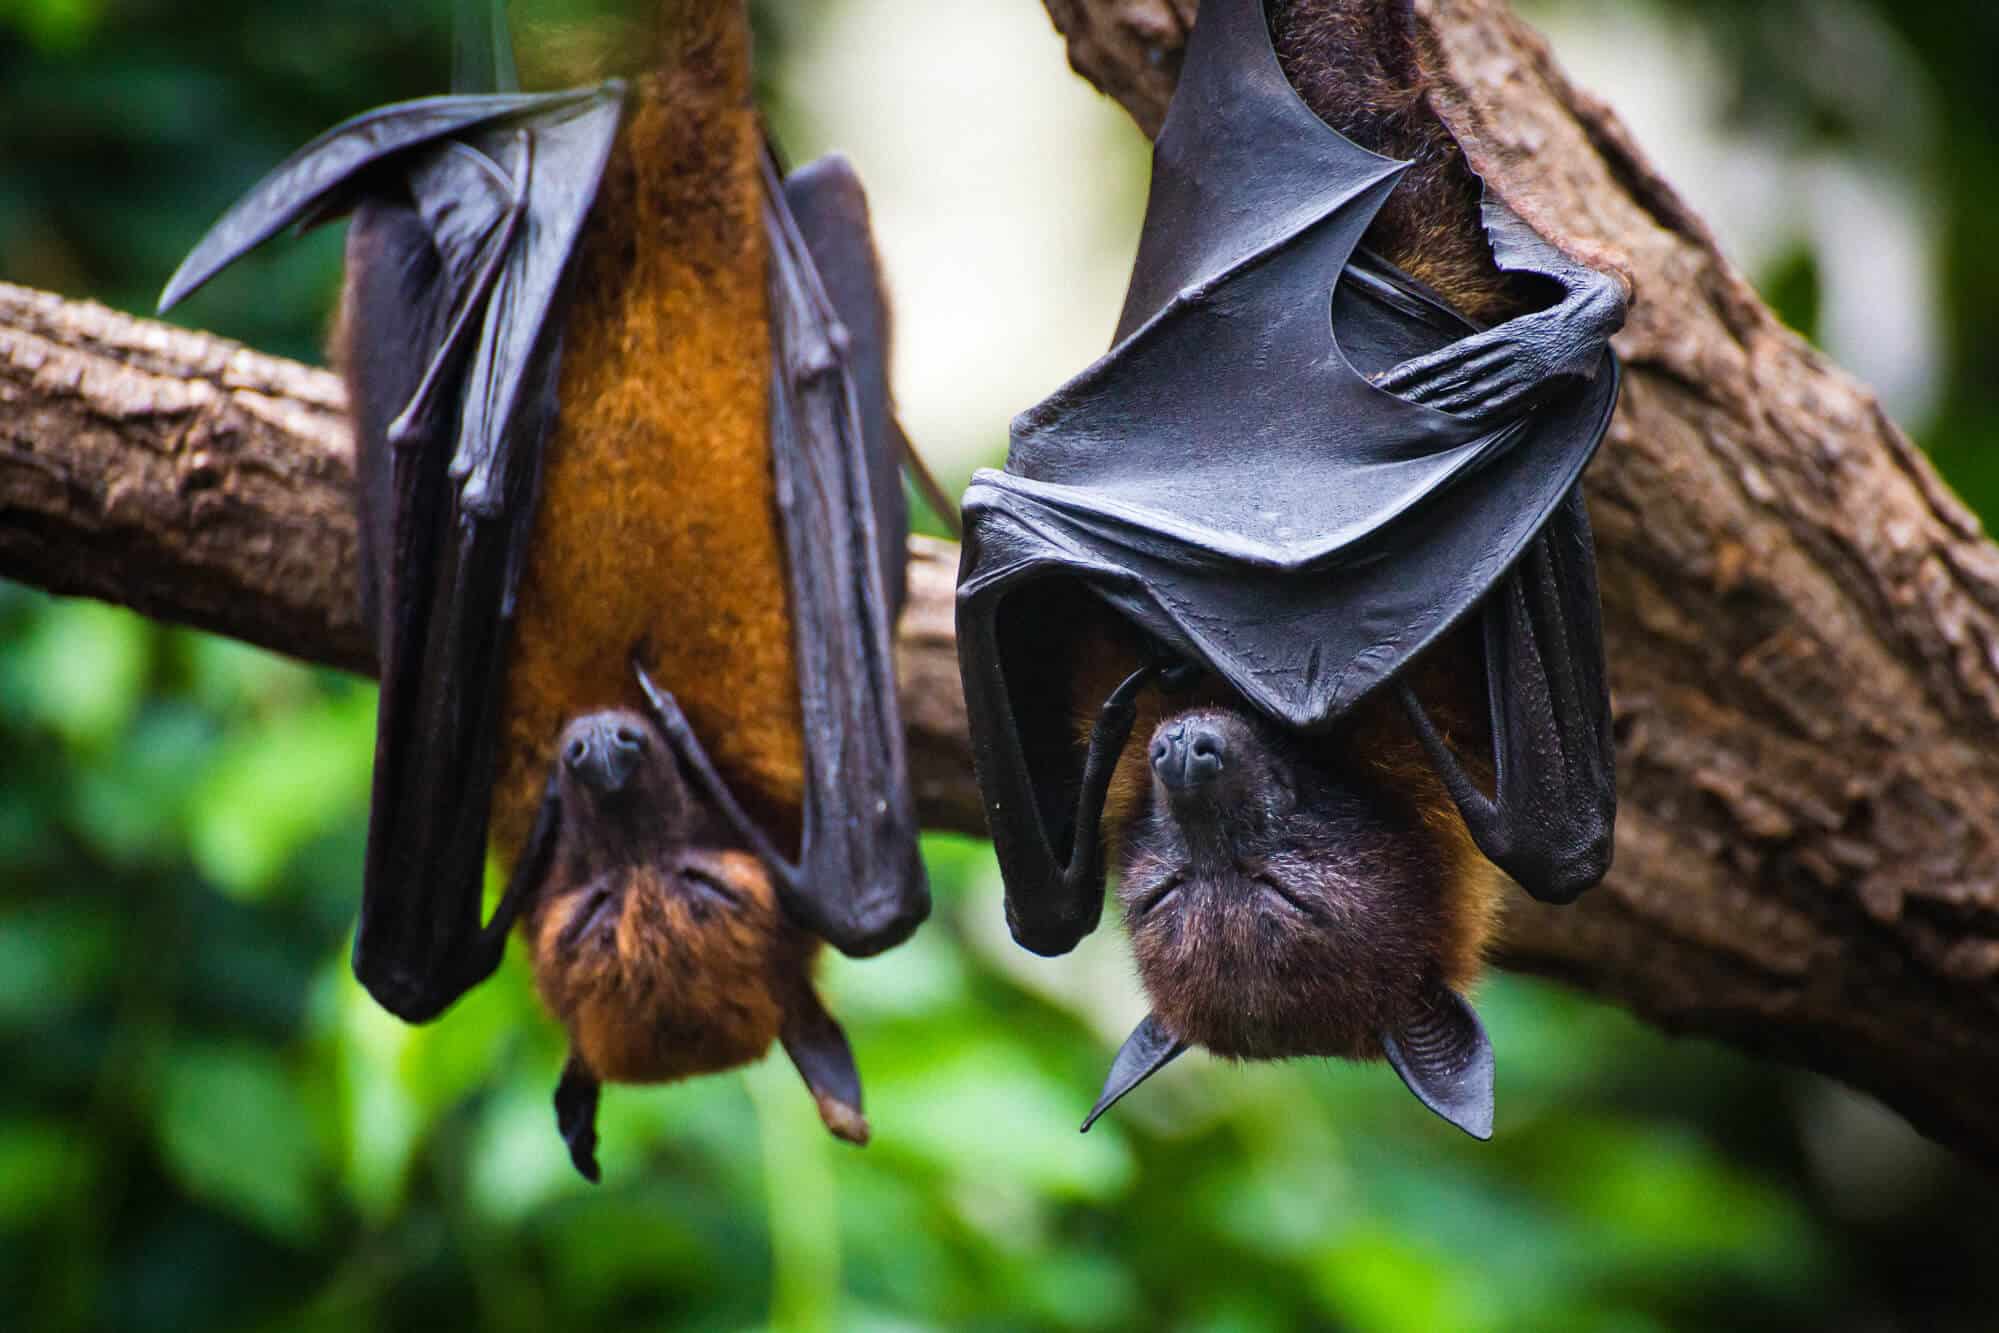 Two fruit bats in Australia. Photo: depositphotos.com